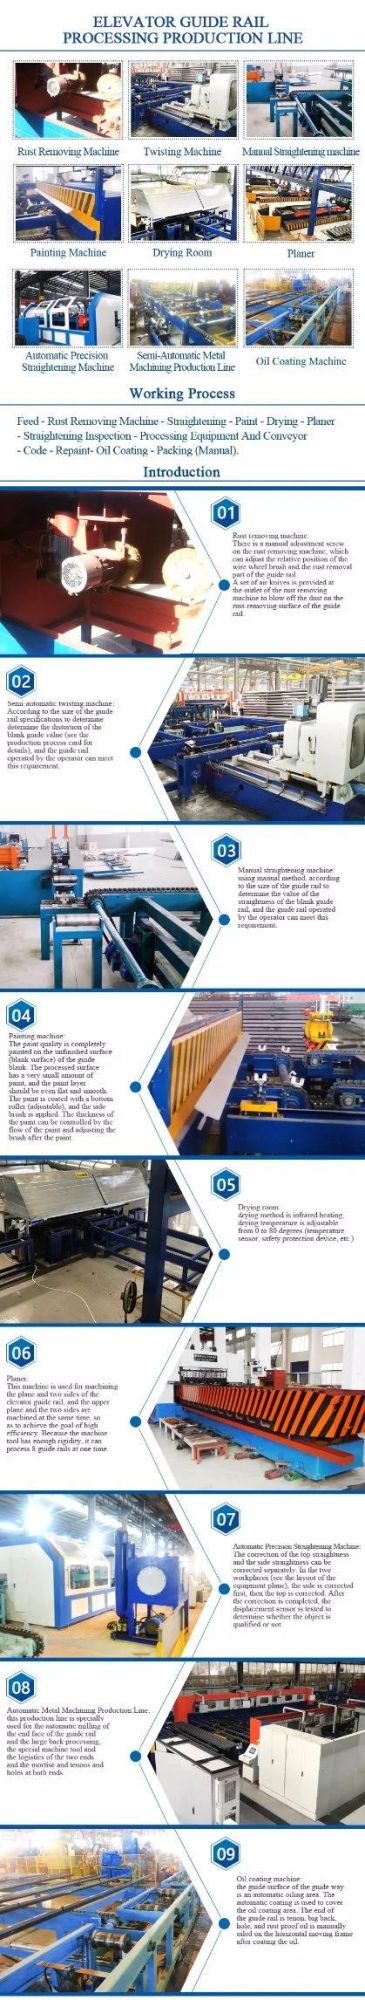 Popular Customized Bracket Hollow Lift Guide Rail Elevator Manufacture Machine